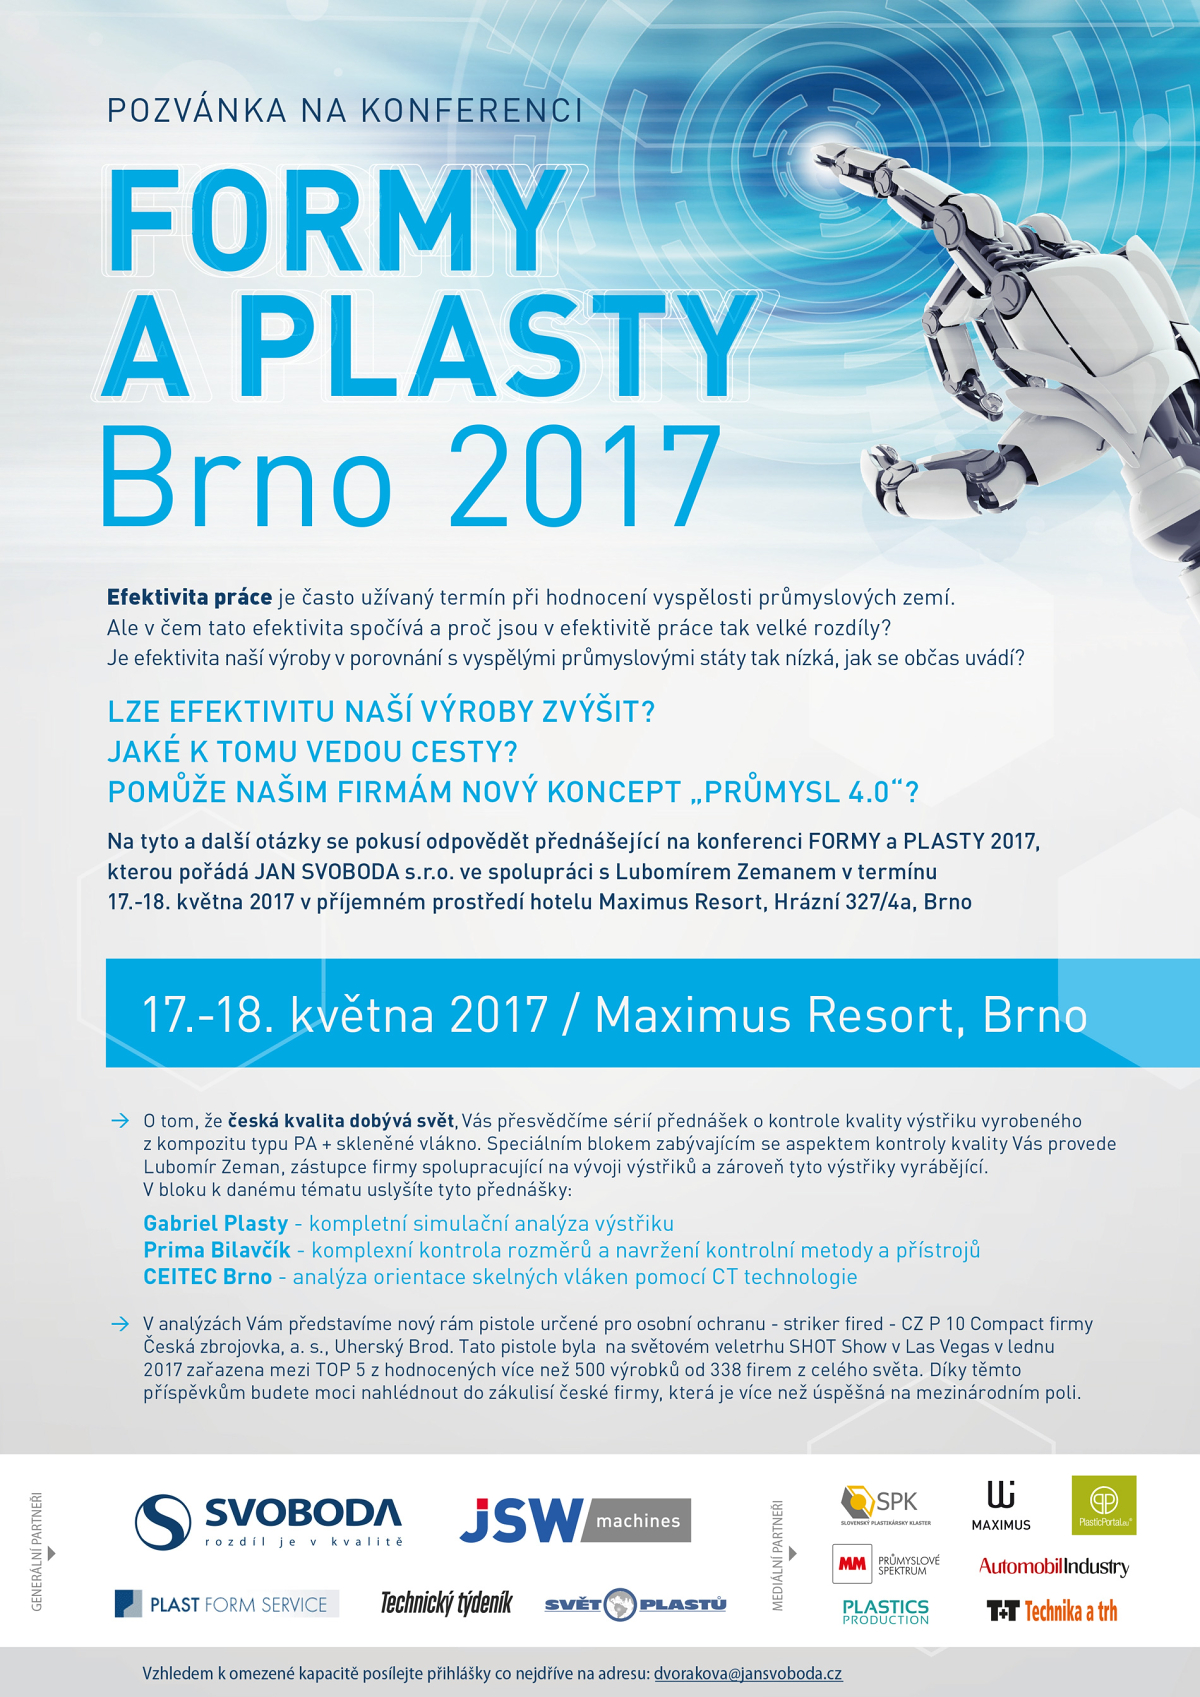 FORMY a PLASTY Brno 2017